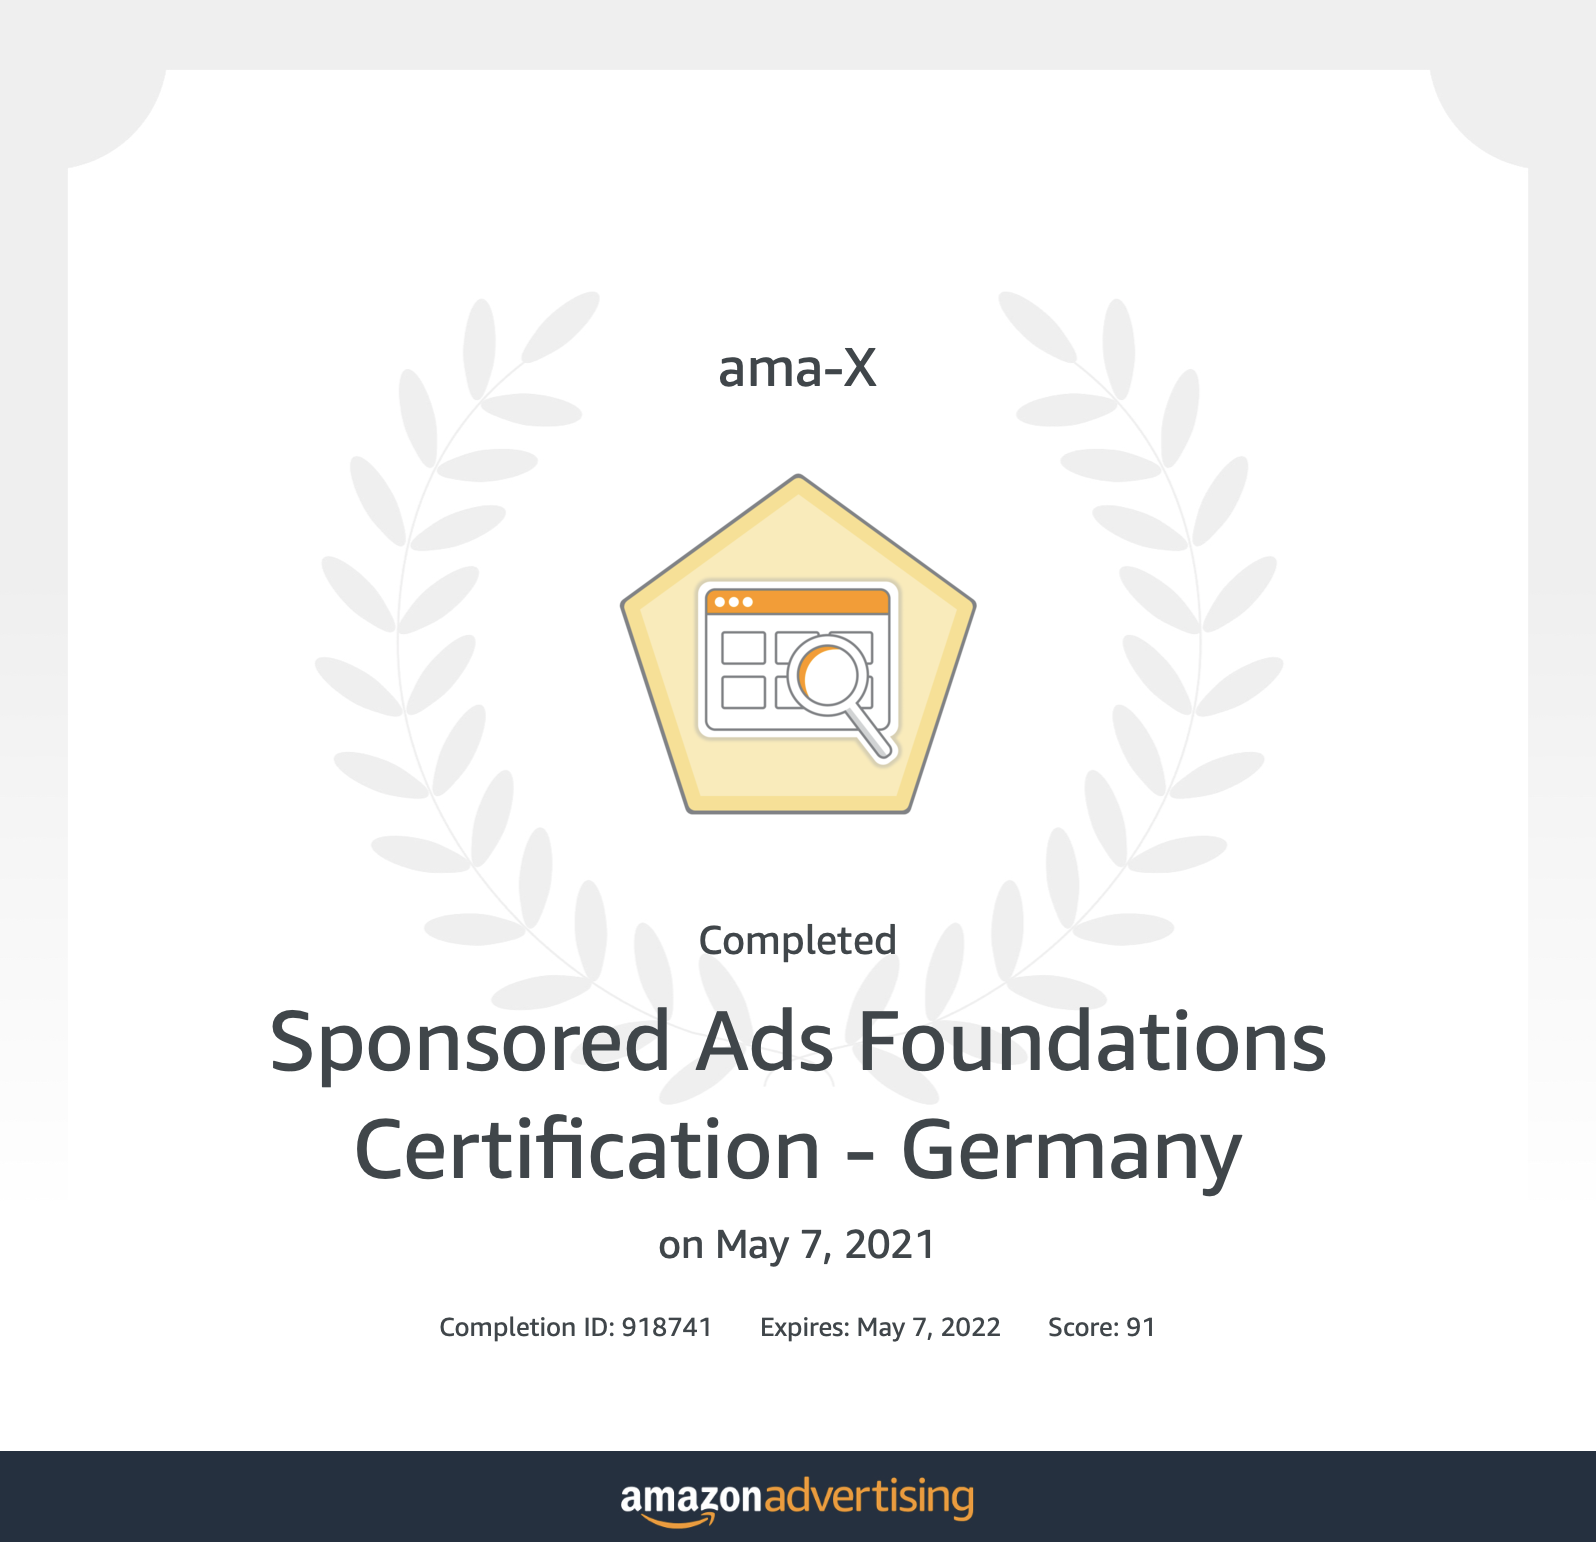 ama-X Sponsored Ads Foundations Certification